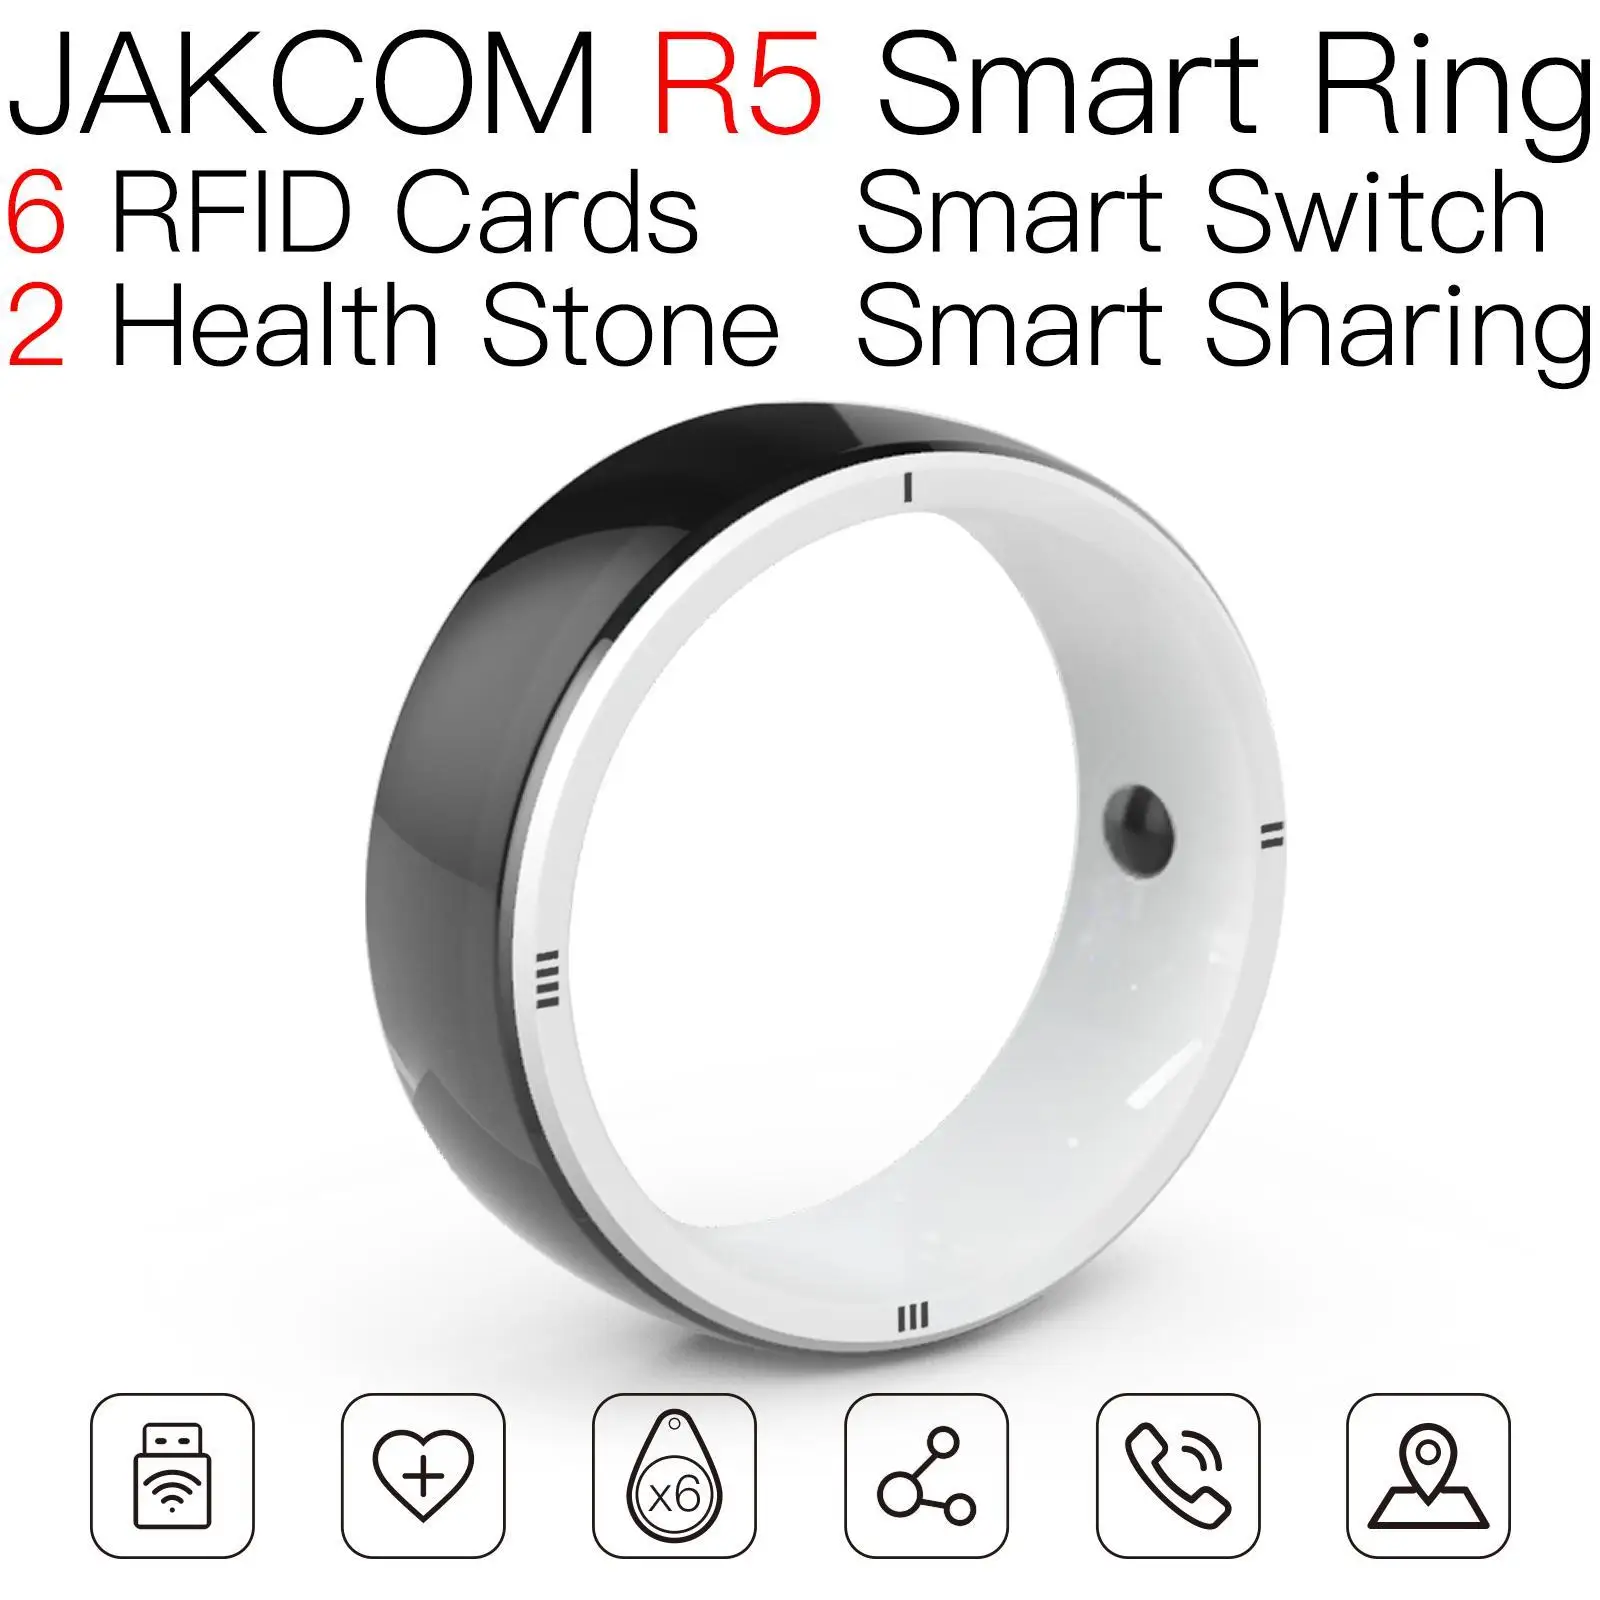 

JAKCOM R5 Smart Ring For men women chicken vaccine syringe rfid ring 125khz cow ears amazon prime video acount reader com crown